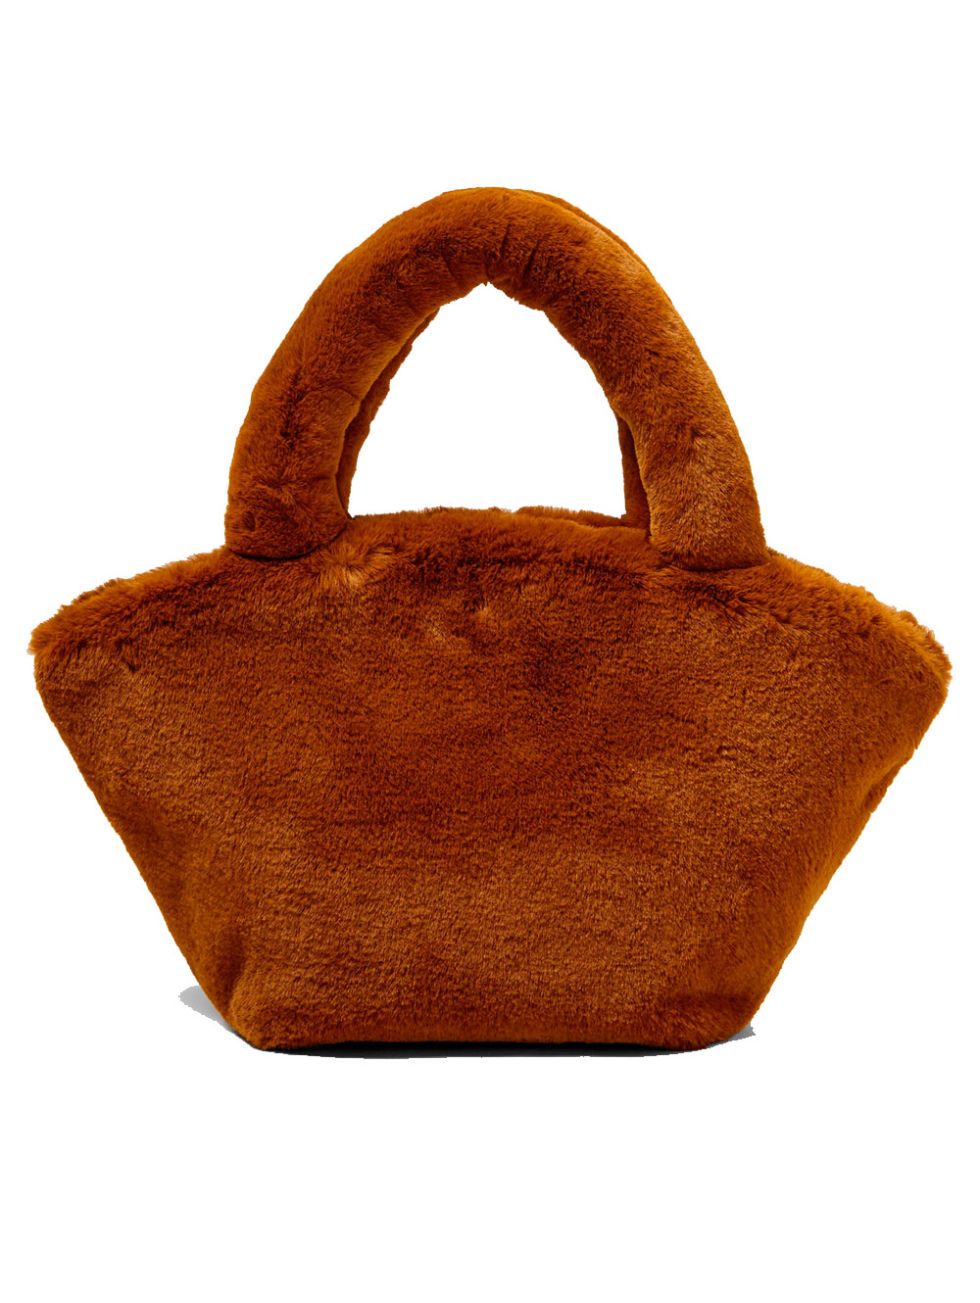 Bag, Handbag, Tan, Brown, Orange, Suede, Leather, Tote bag, Fashion accessory, Luggage and bags, 